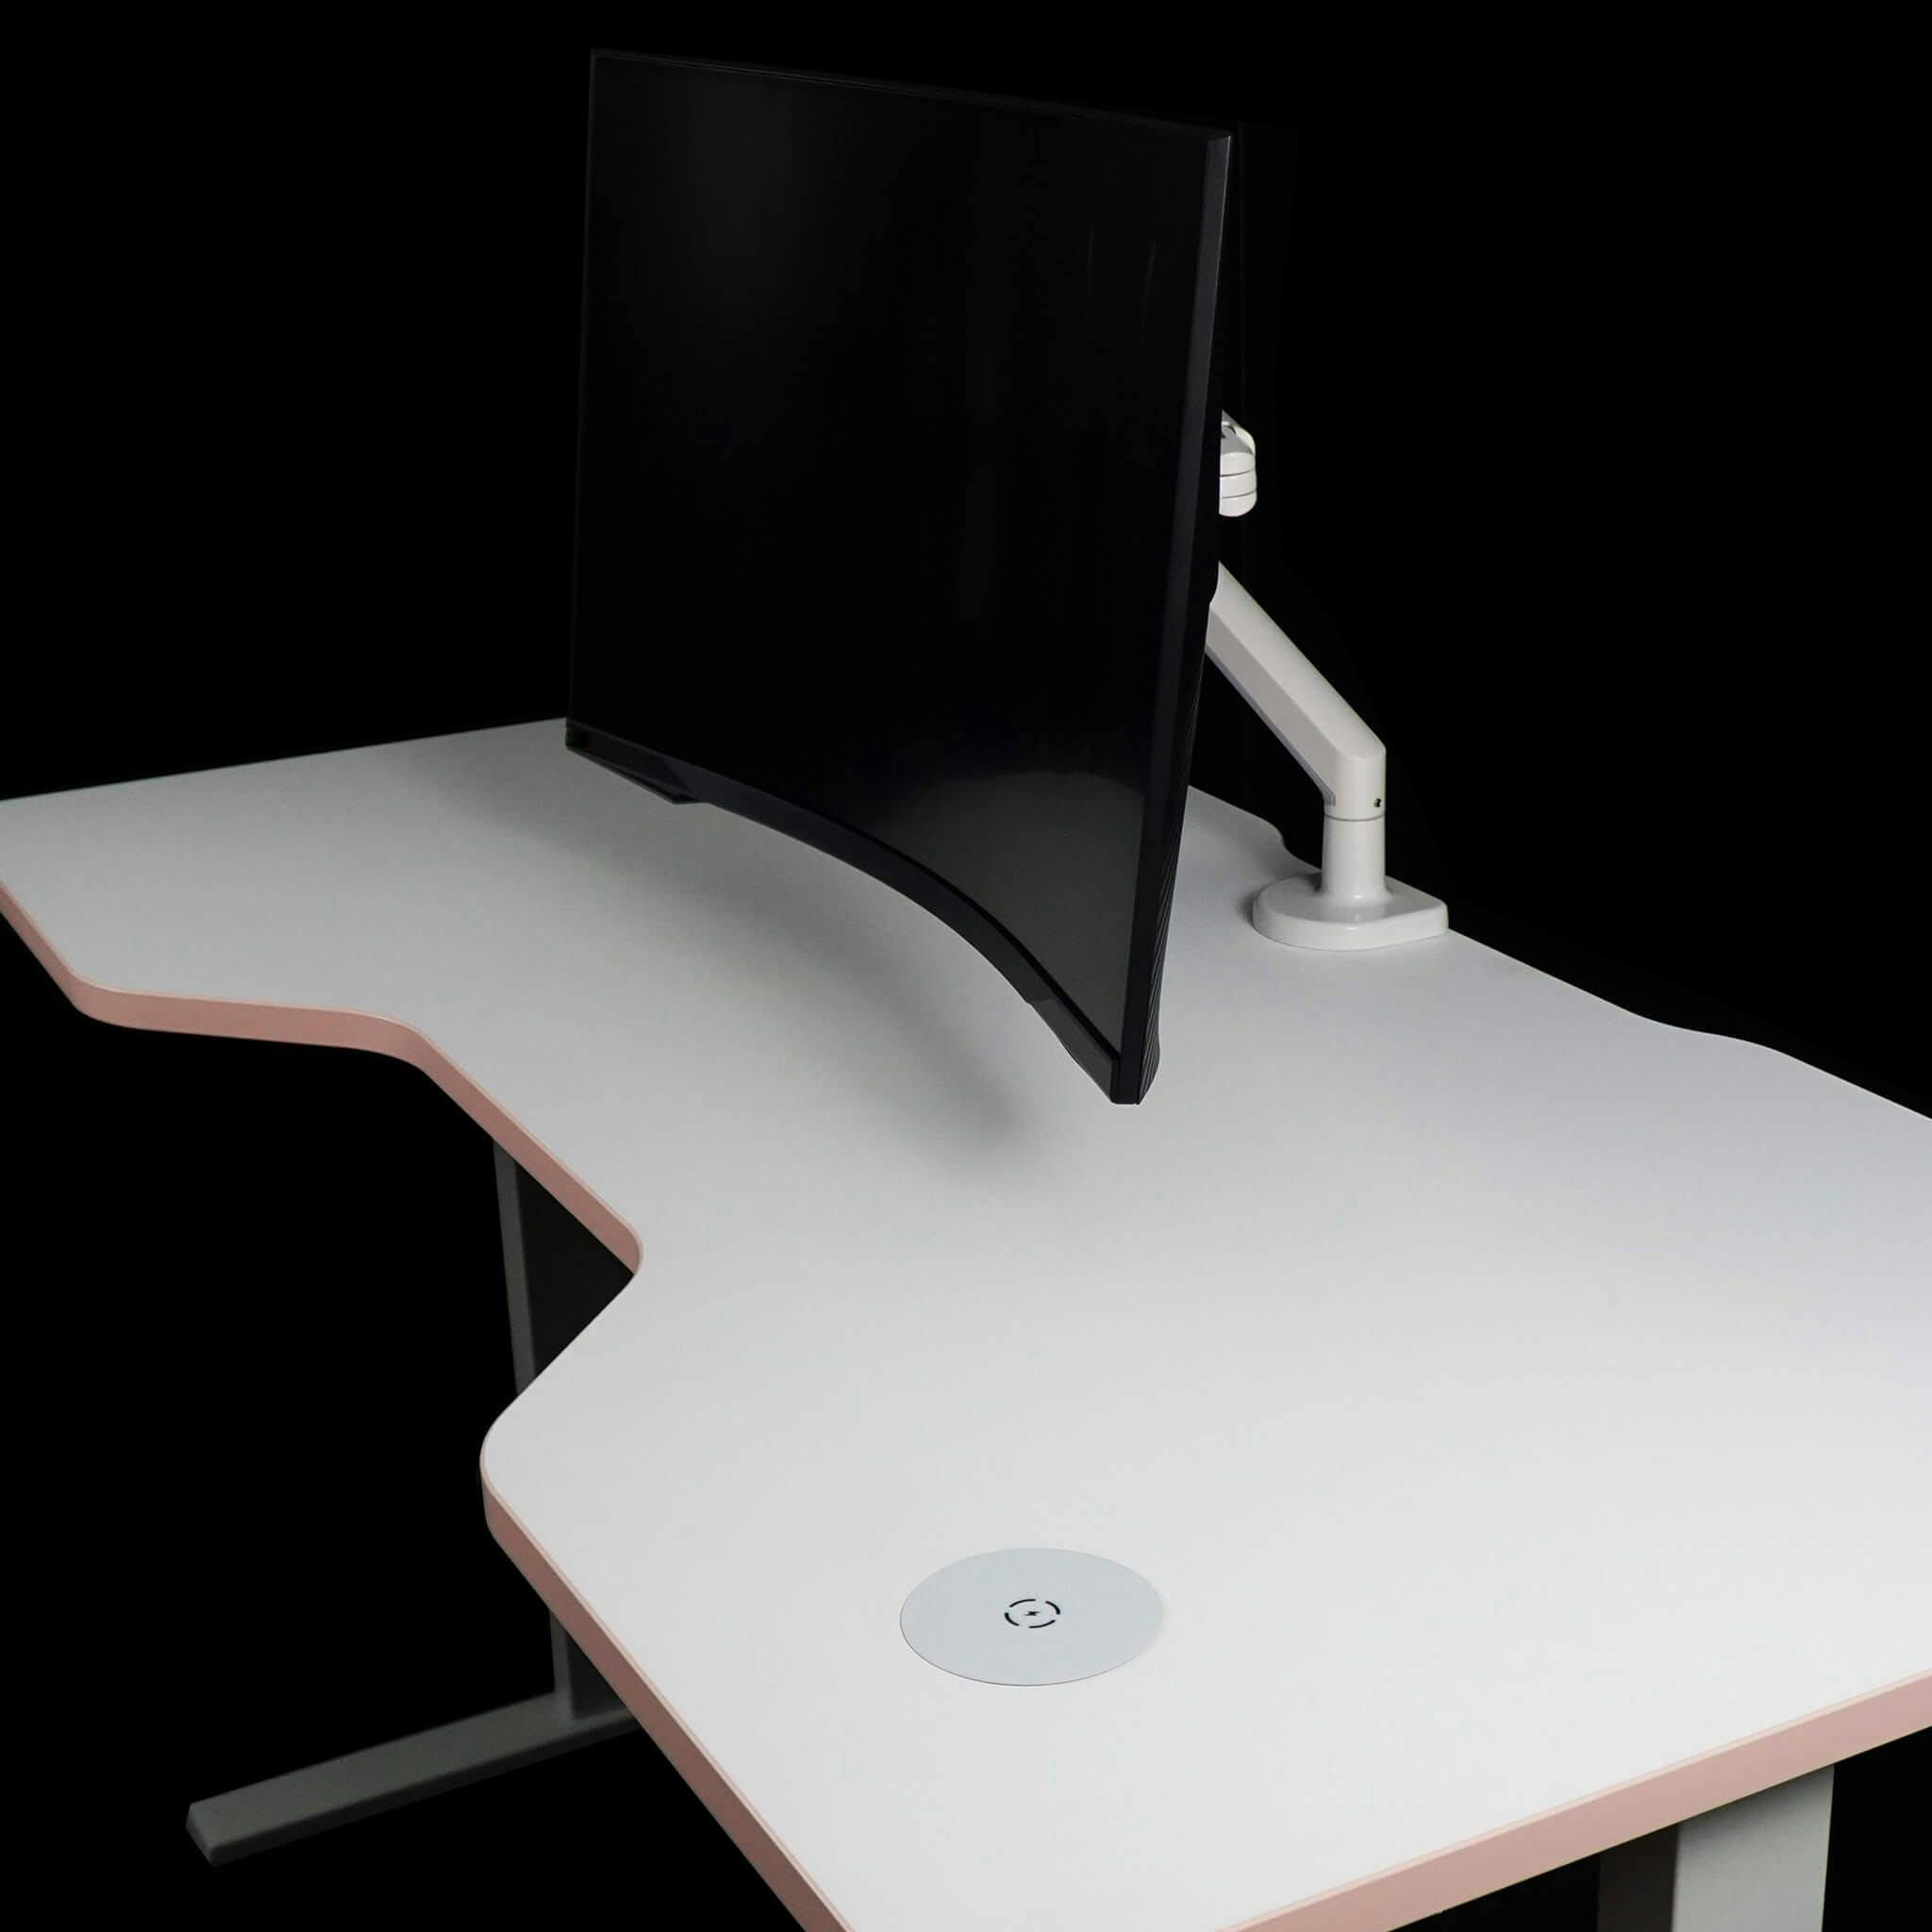 LeetDesk Triple Monitorarm for Gaming Desks - Attached to Gamer desk